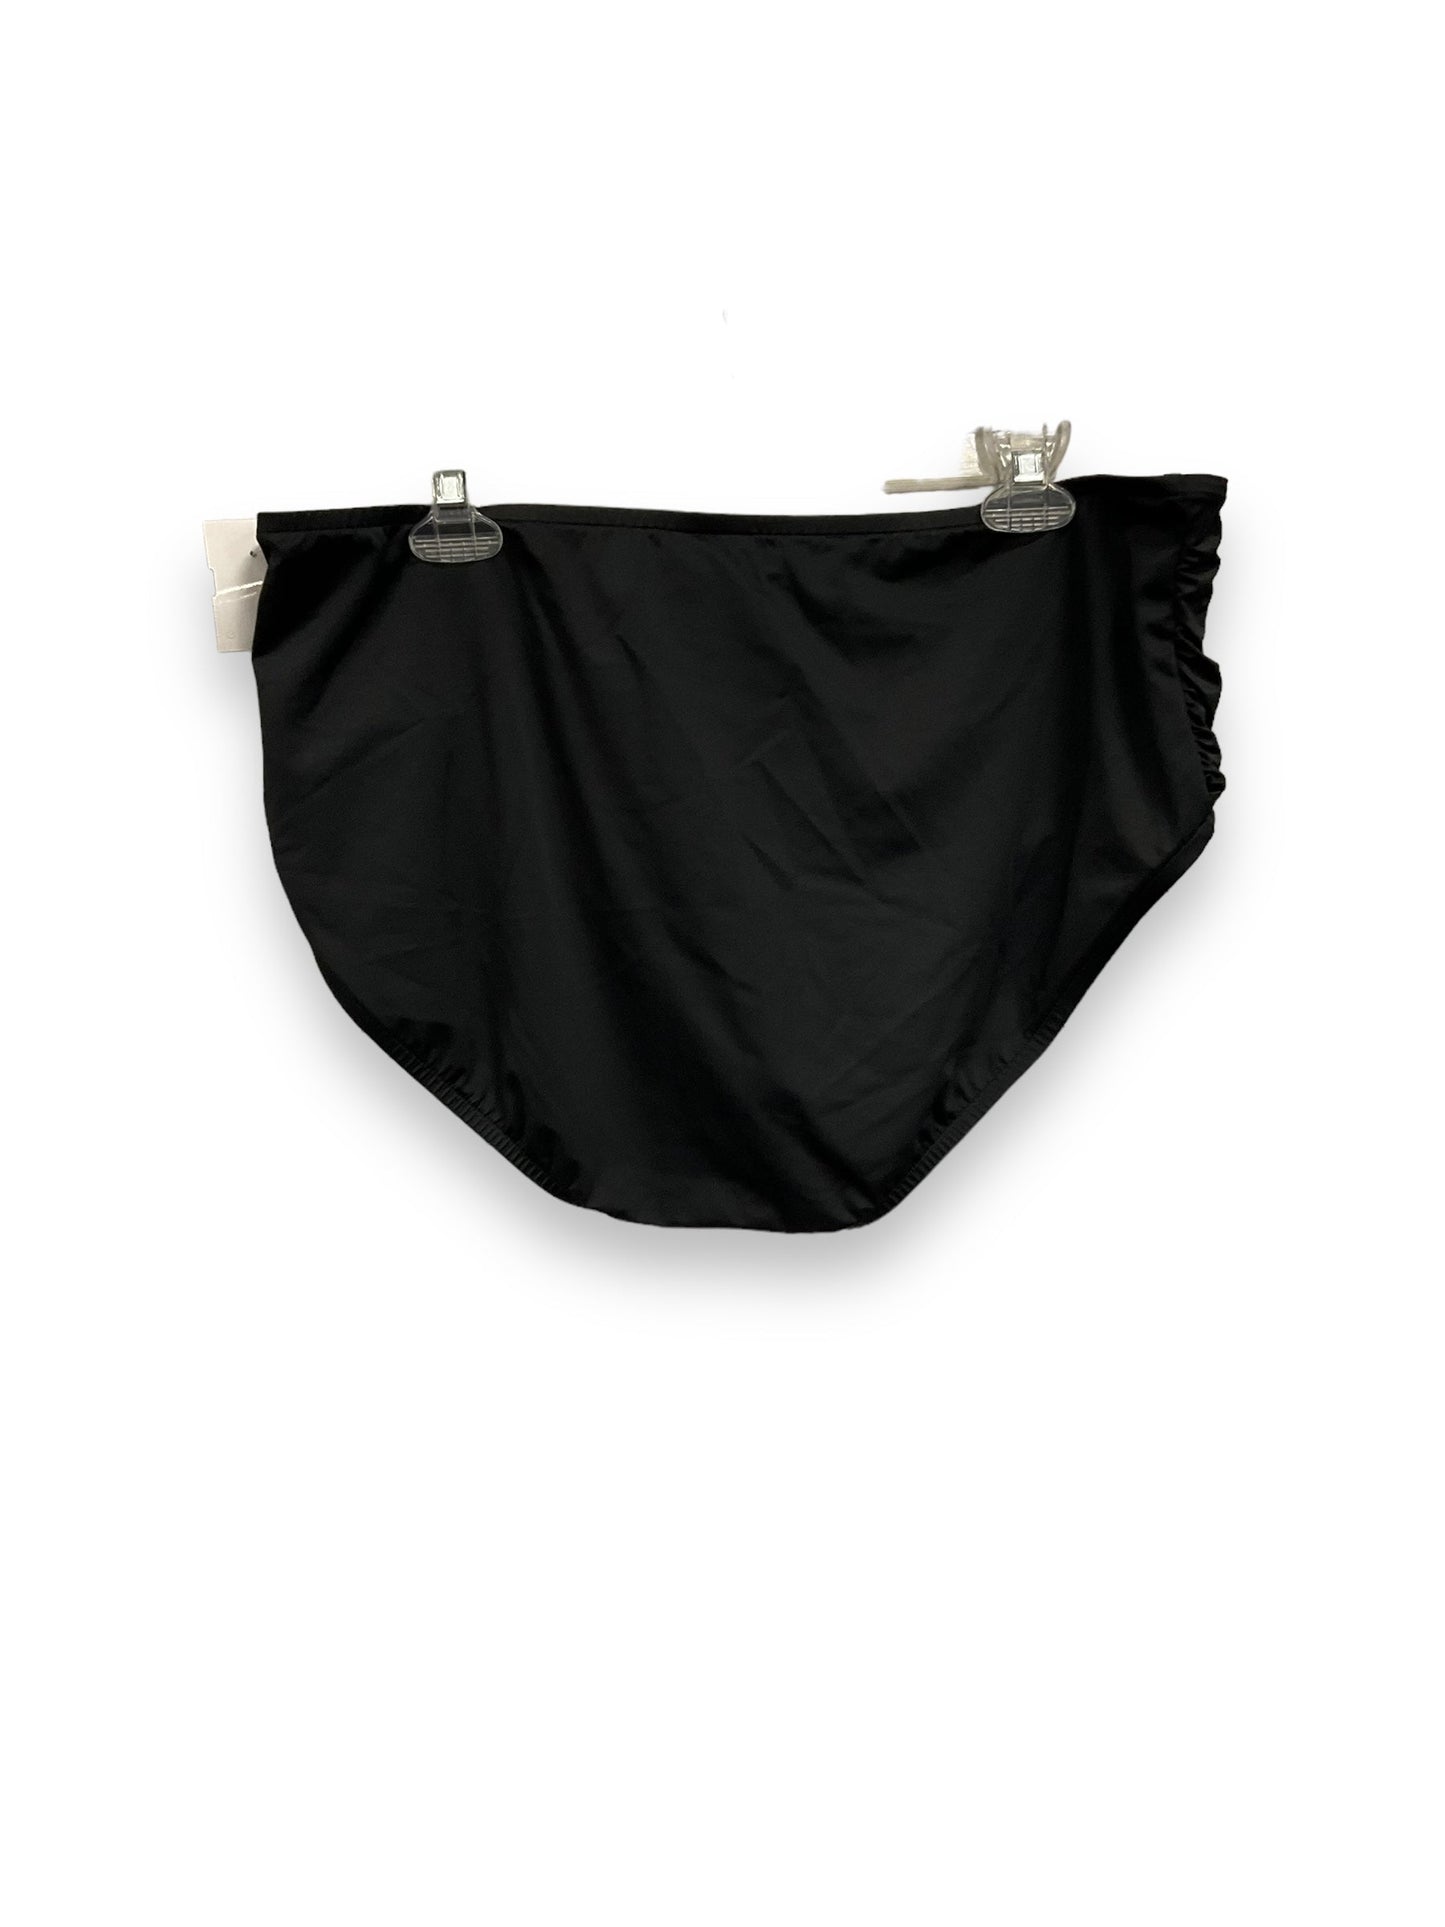 Black Swimsuit Bottom Clothes Mentor, Size Xl